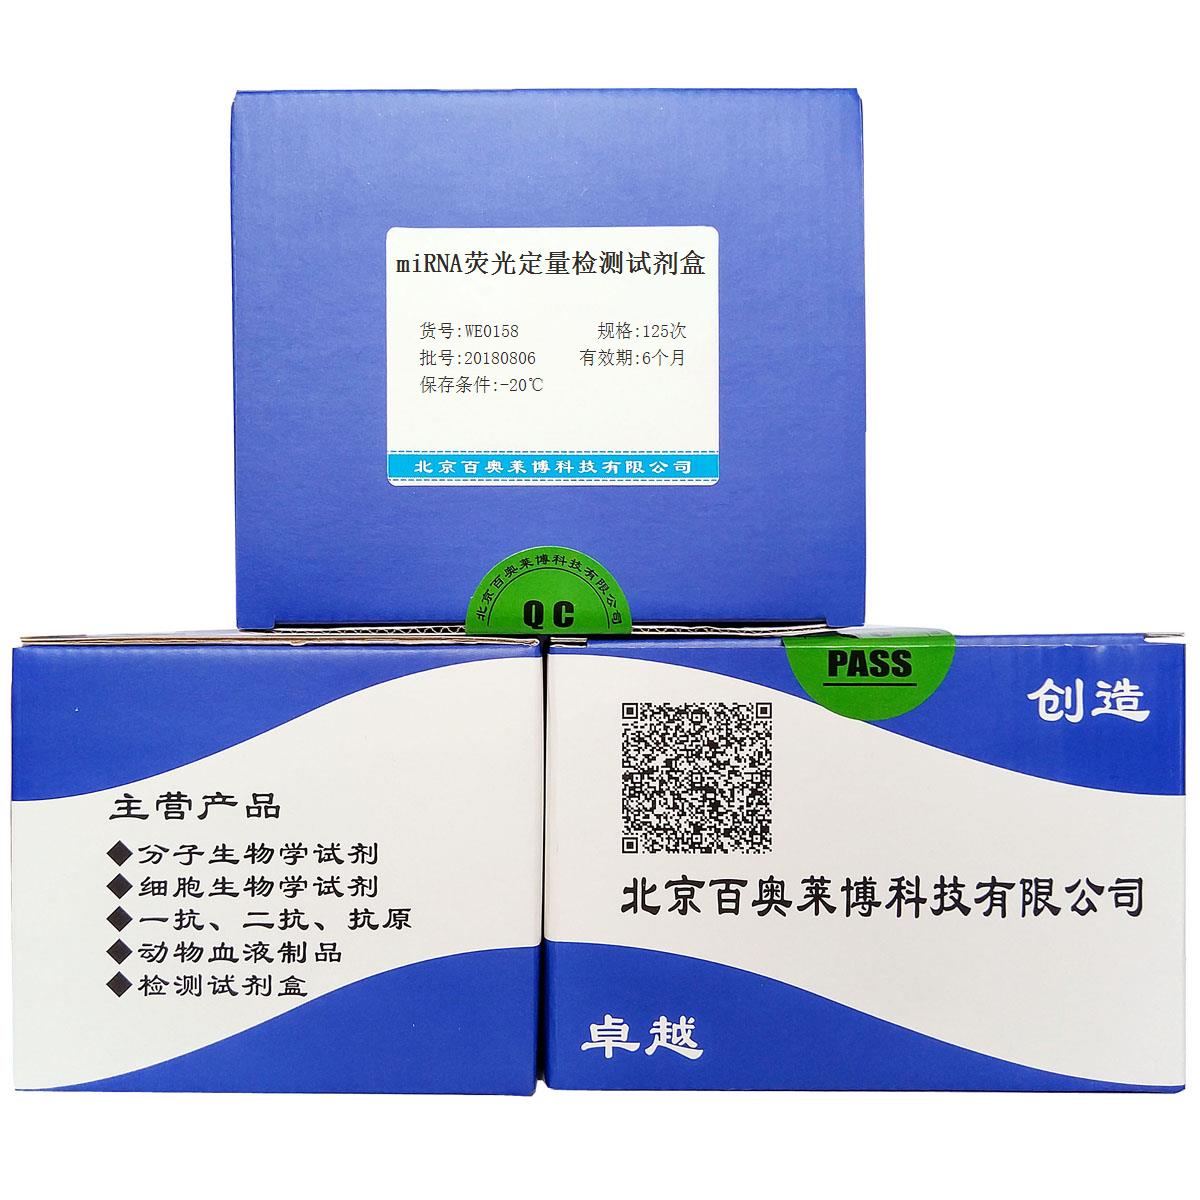 miRNA荧光定量检测试剂盒